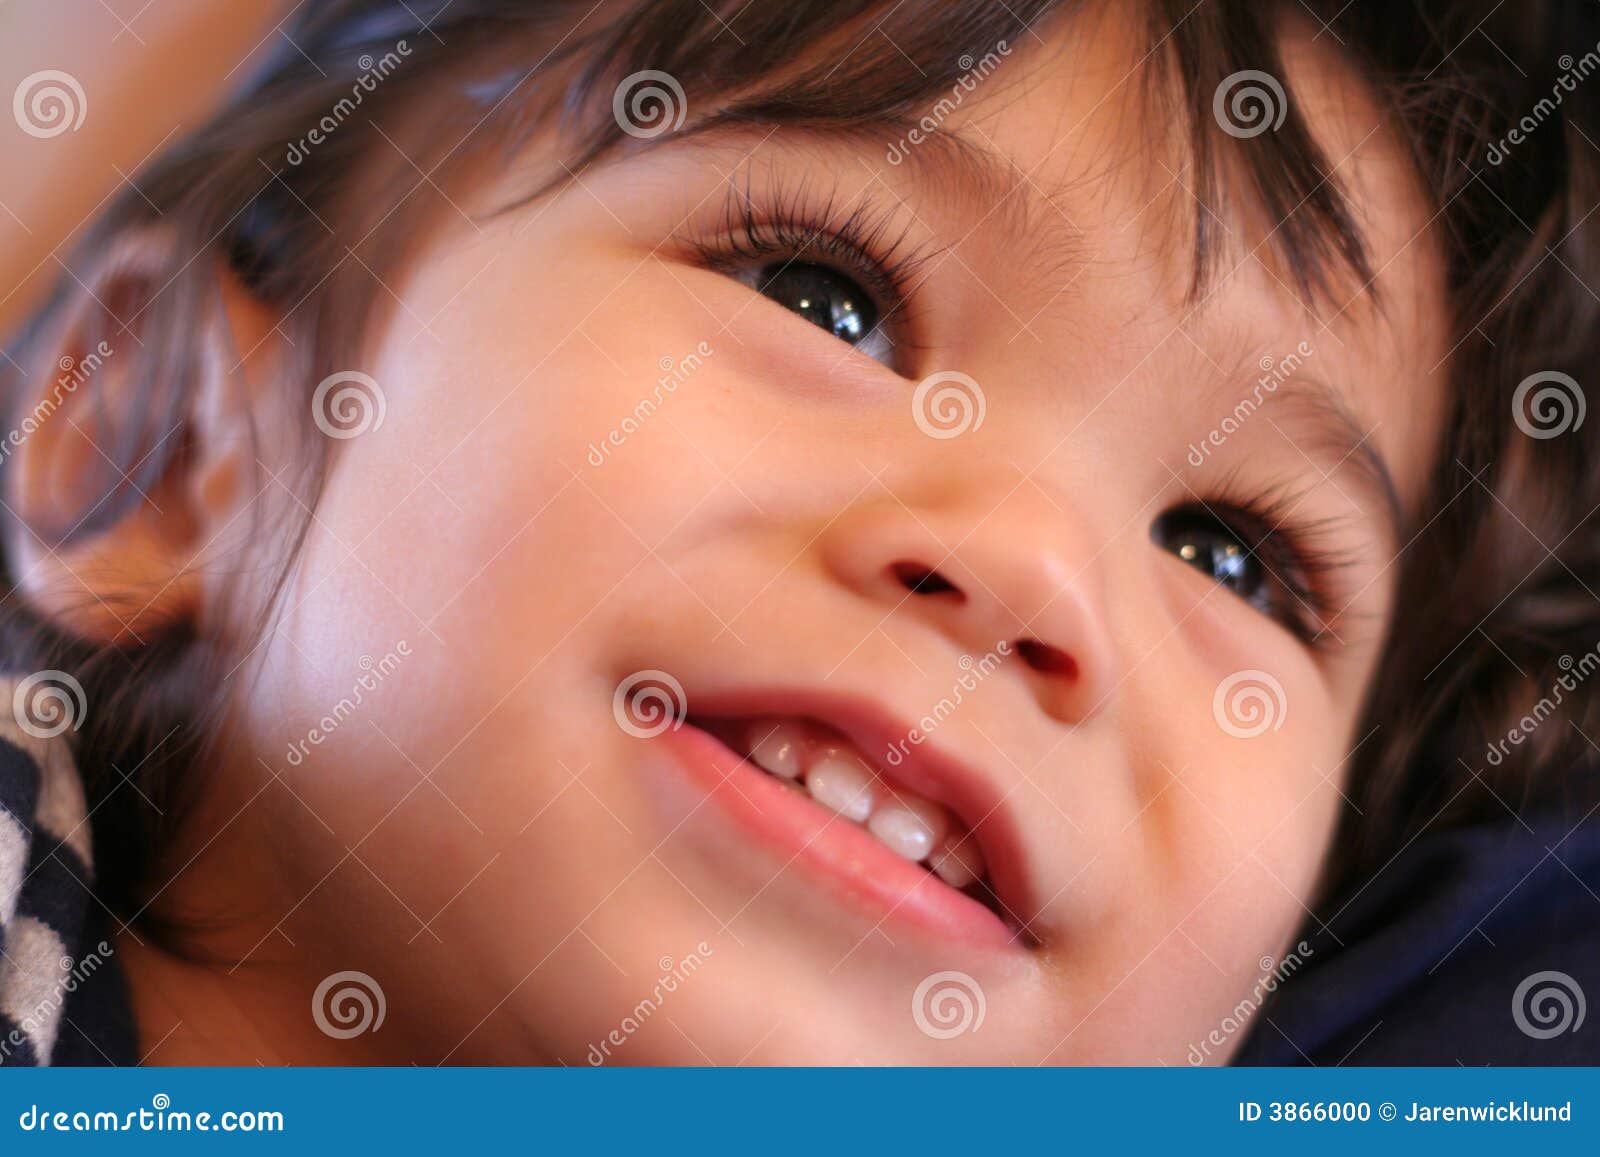 adorable toddler smiling